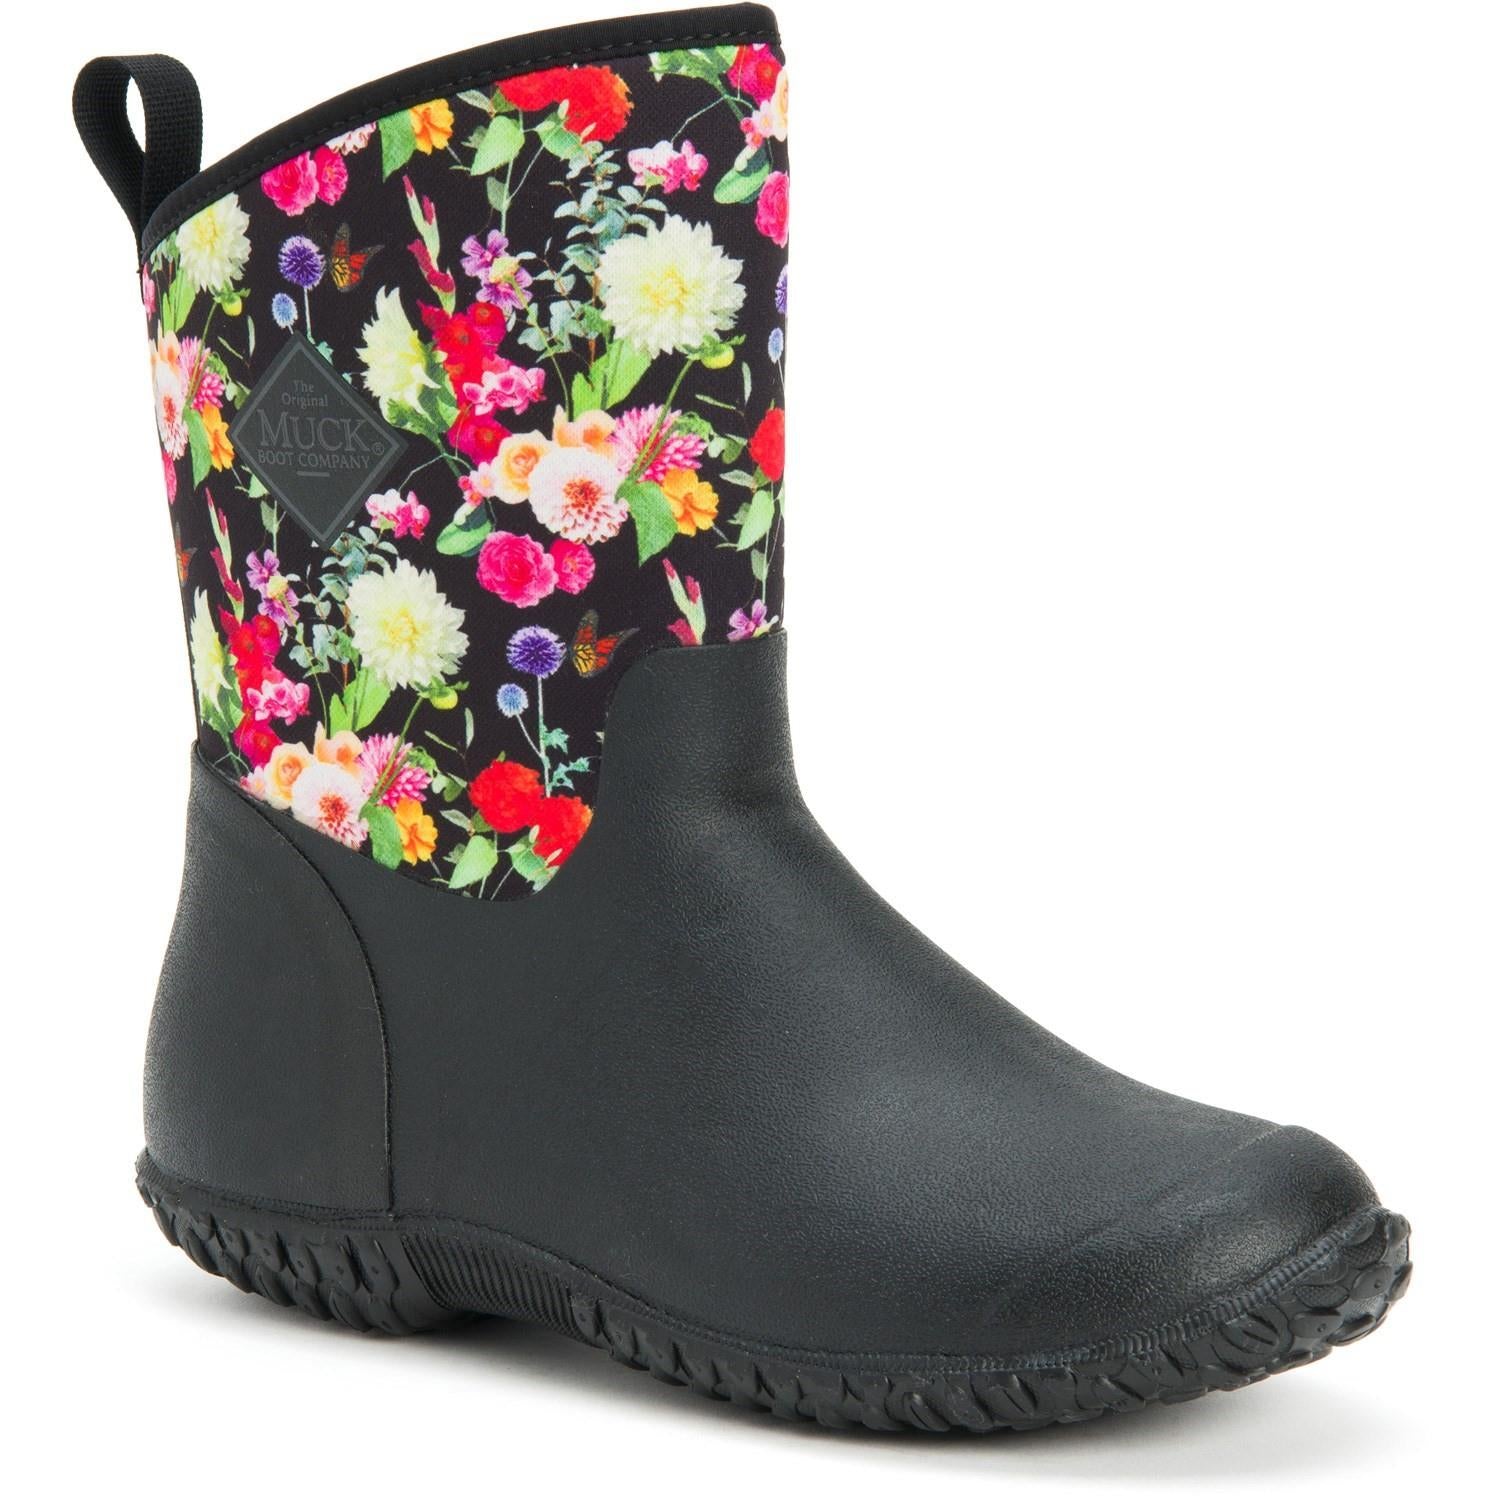 Muck Boots Muckster II Mid ladies black floral waterproof warm wellington boots